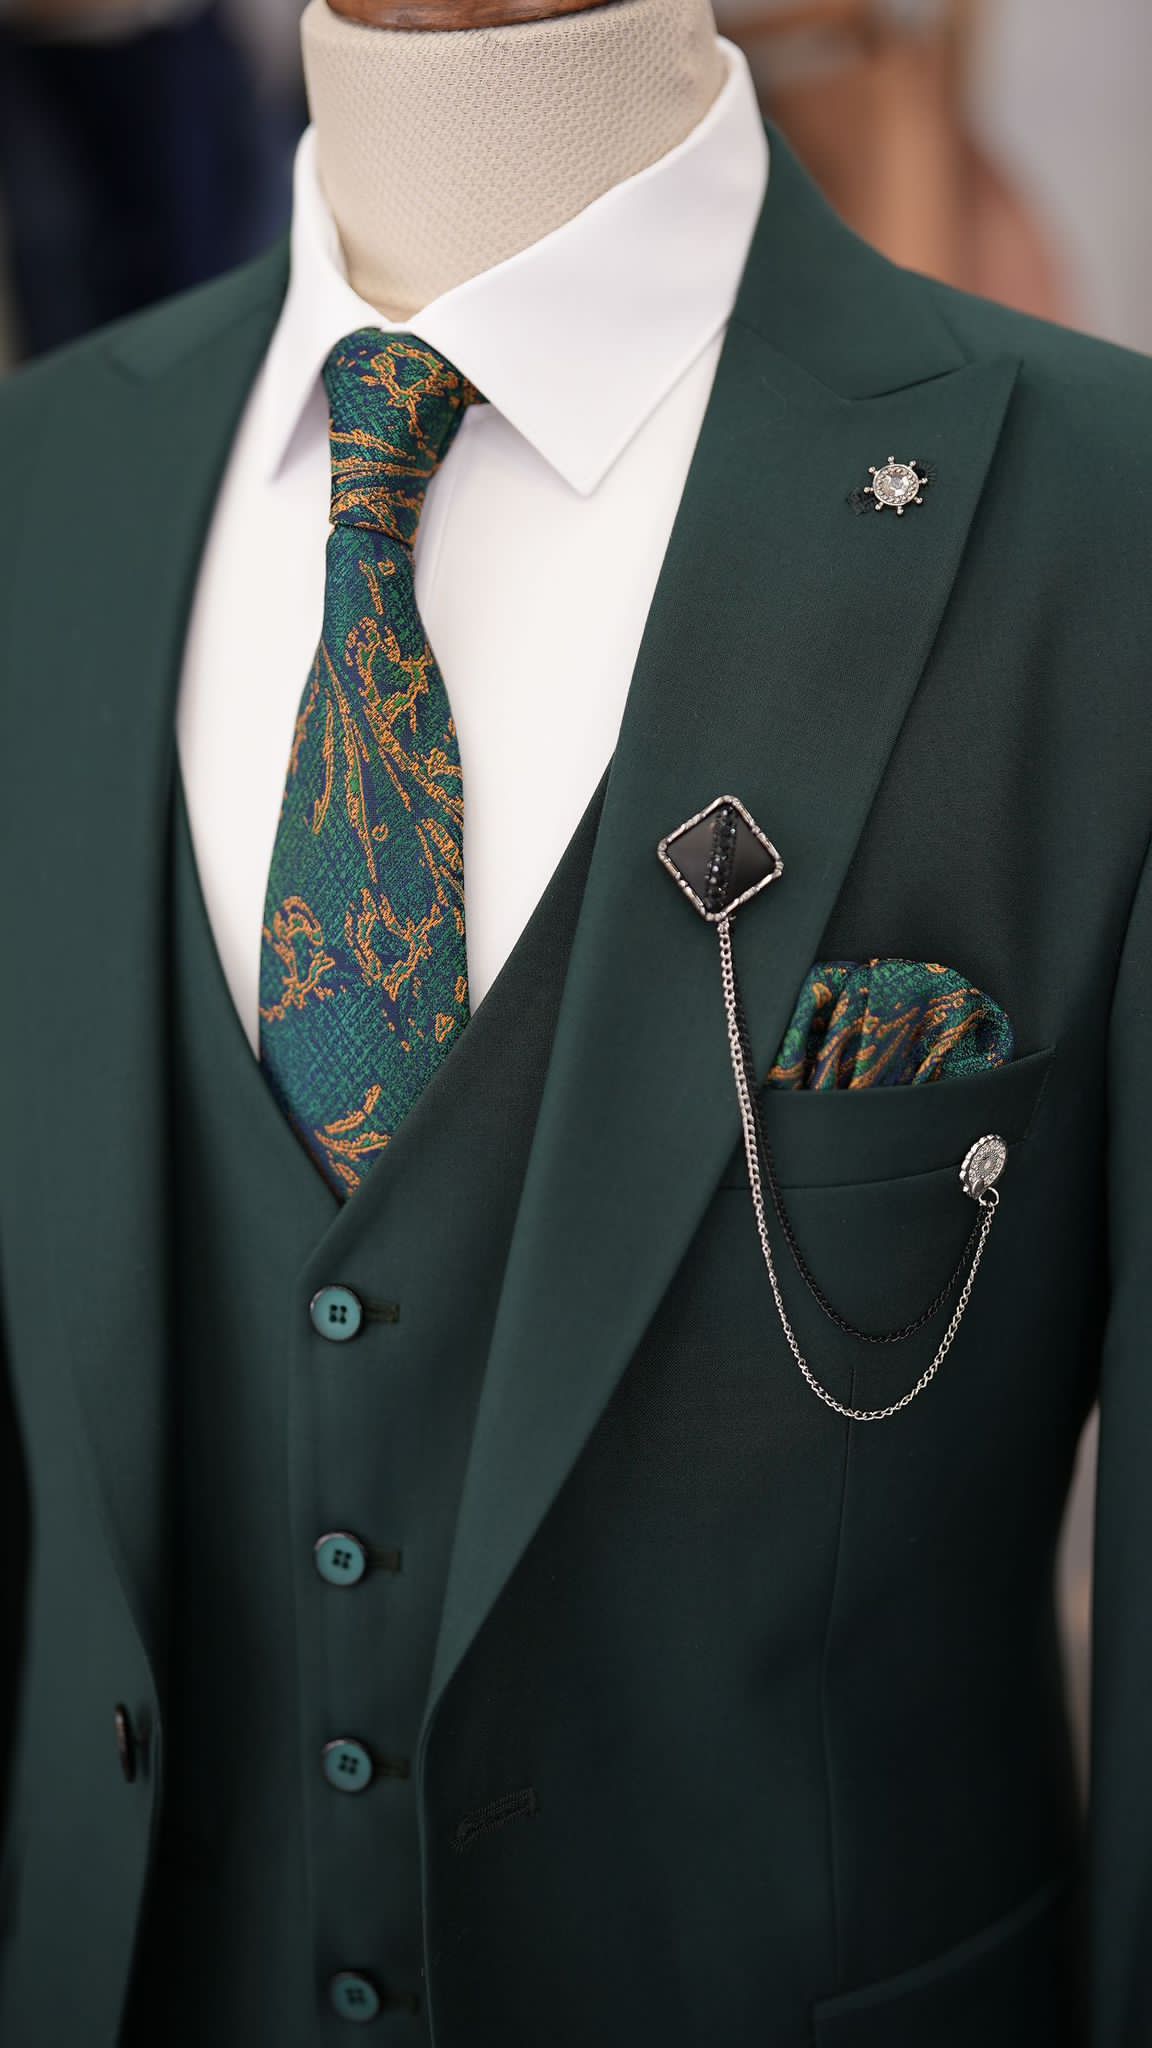 The Regal Olive Green Suit - Legacy Lapels